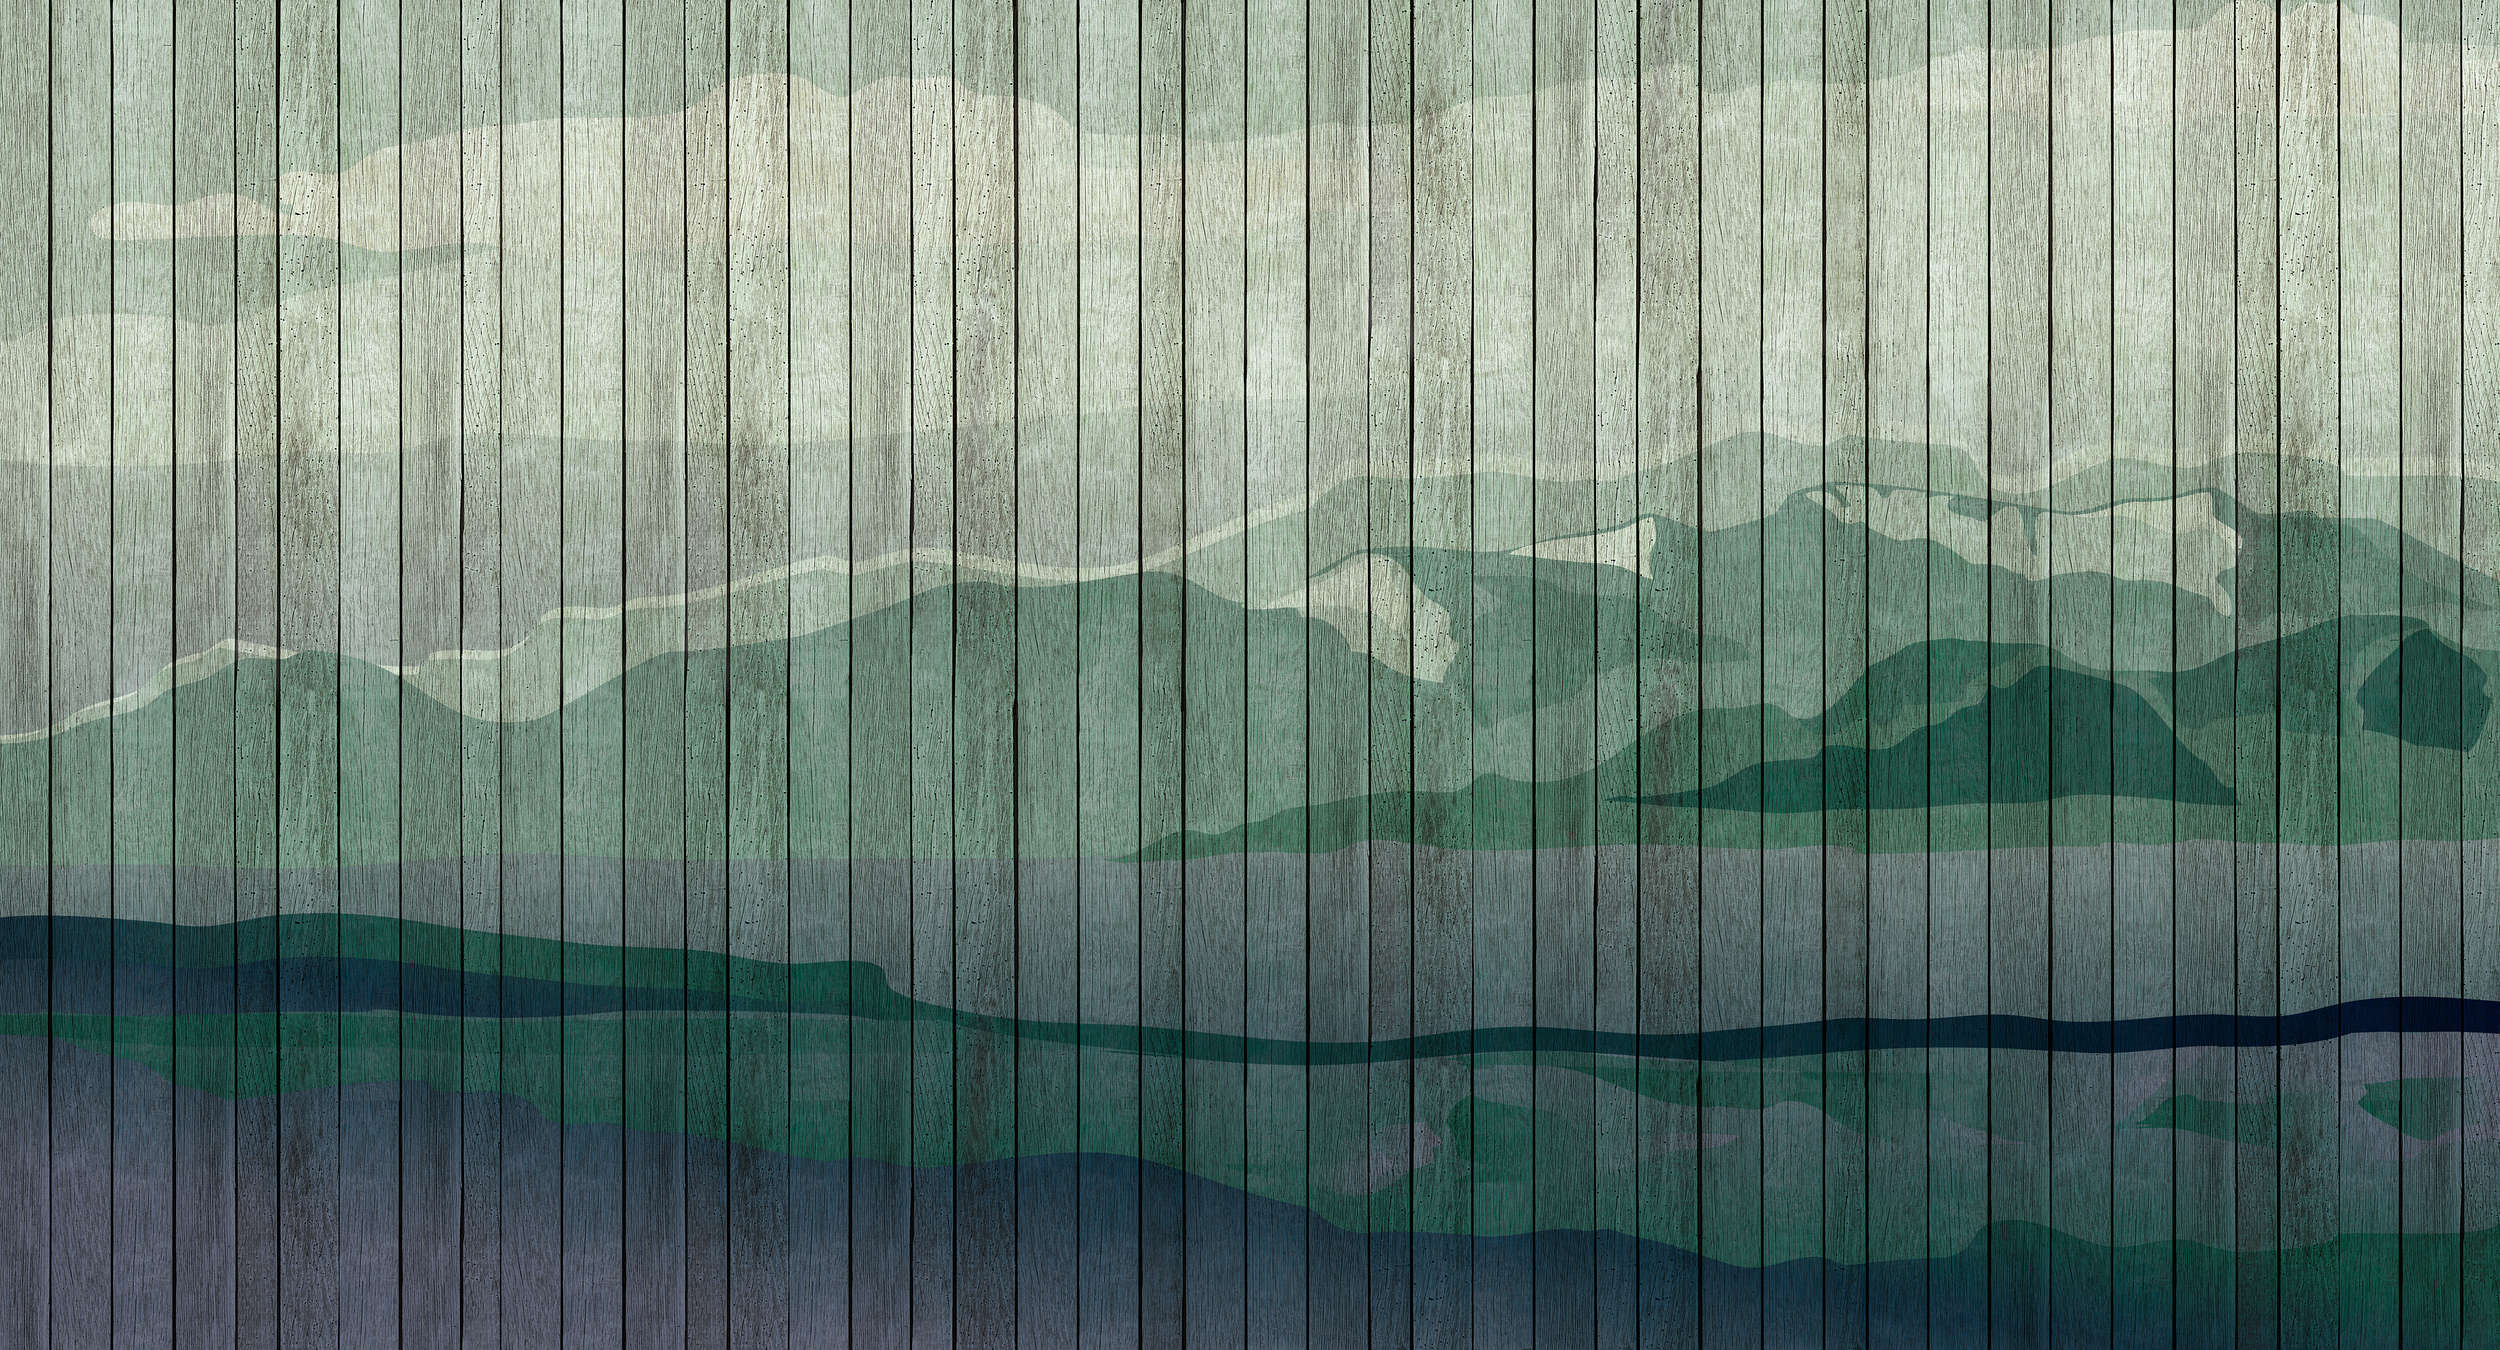             Mountains 3 - Carta da parati moderna Paesaggio montano e ottica - Blu, Verde | Pile liscio premium
        